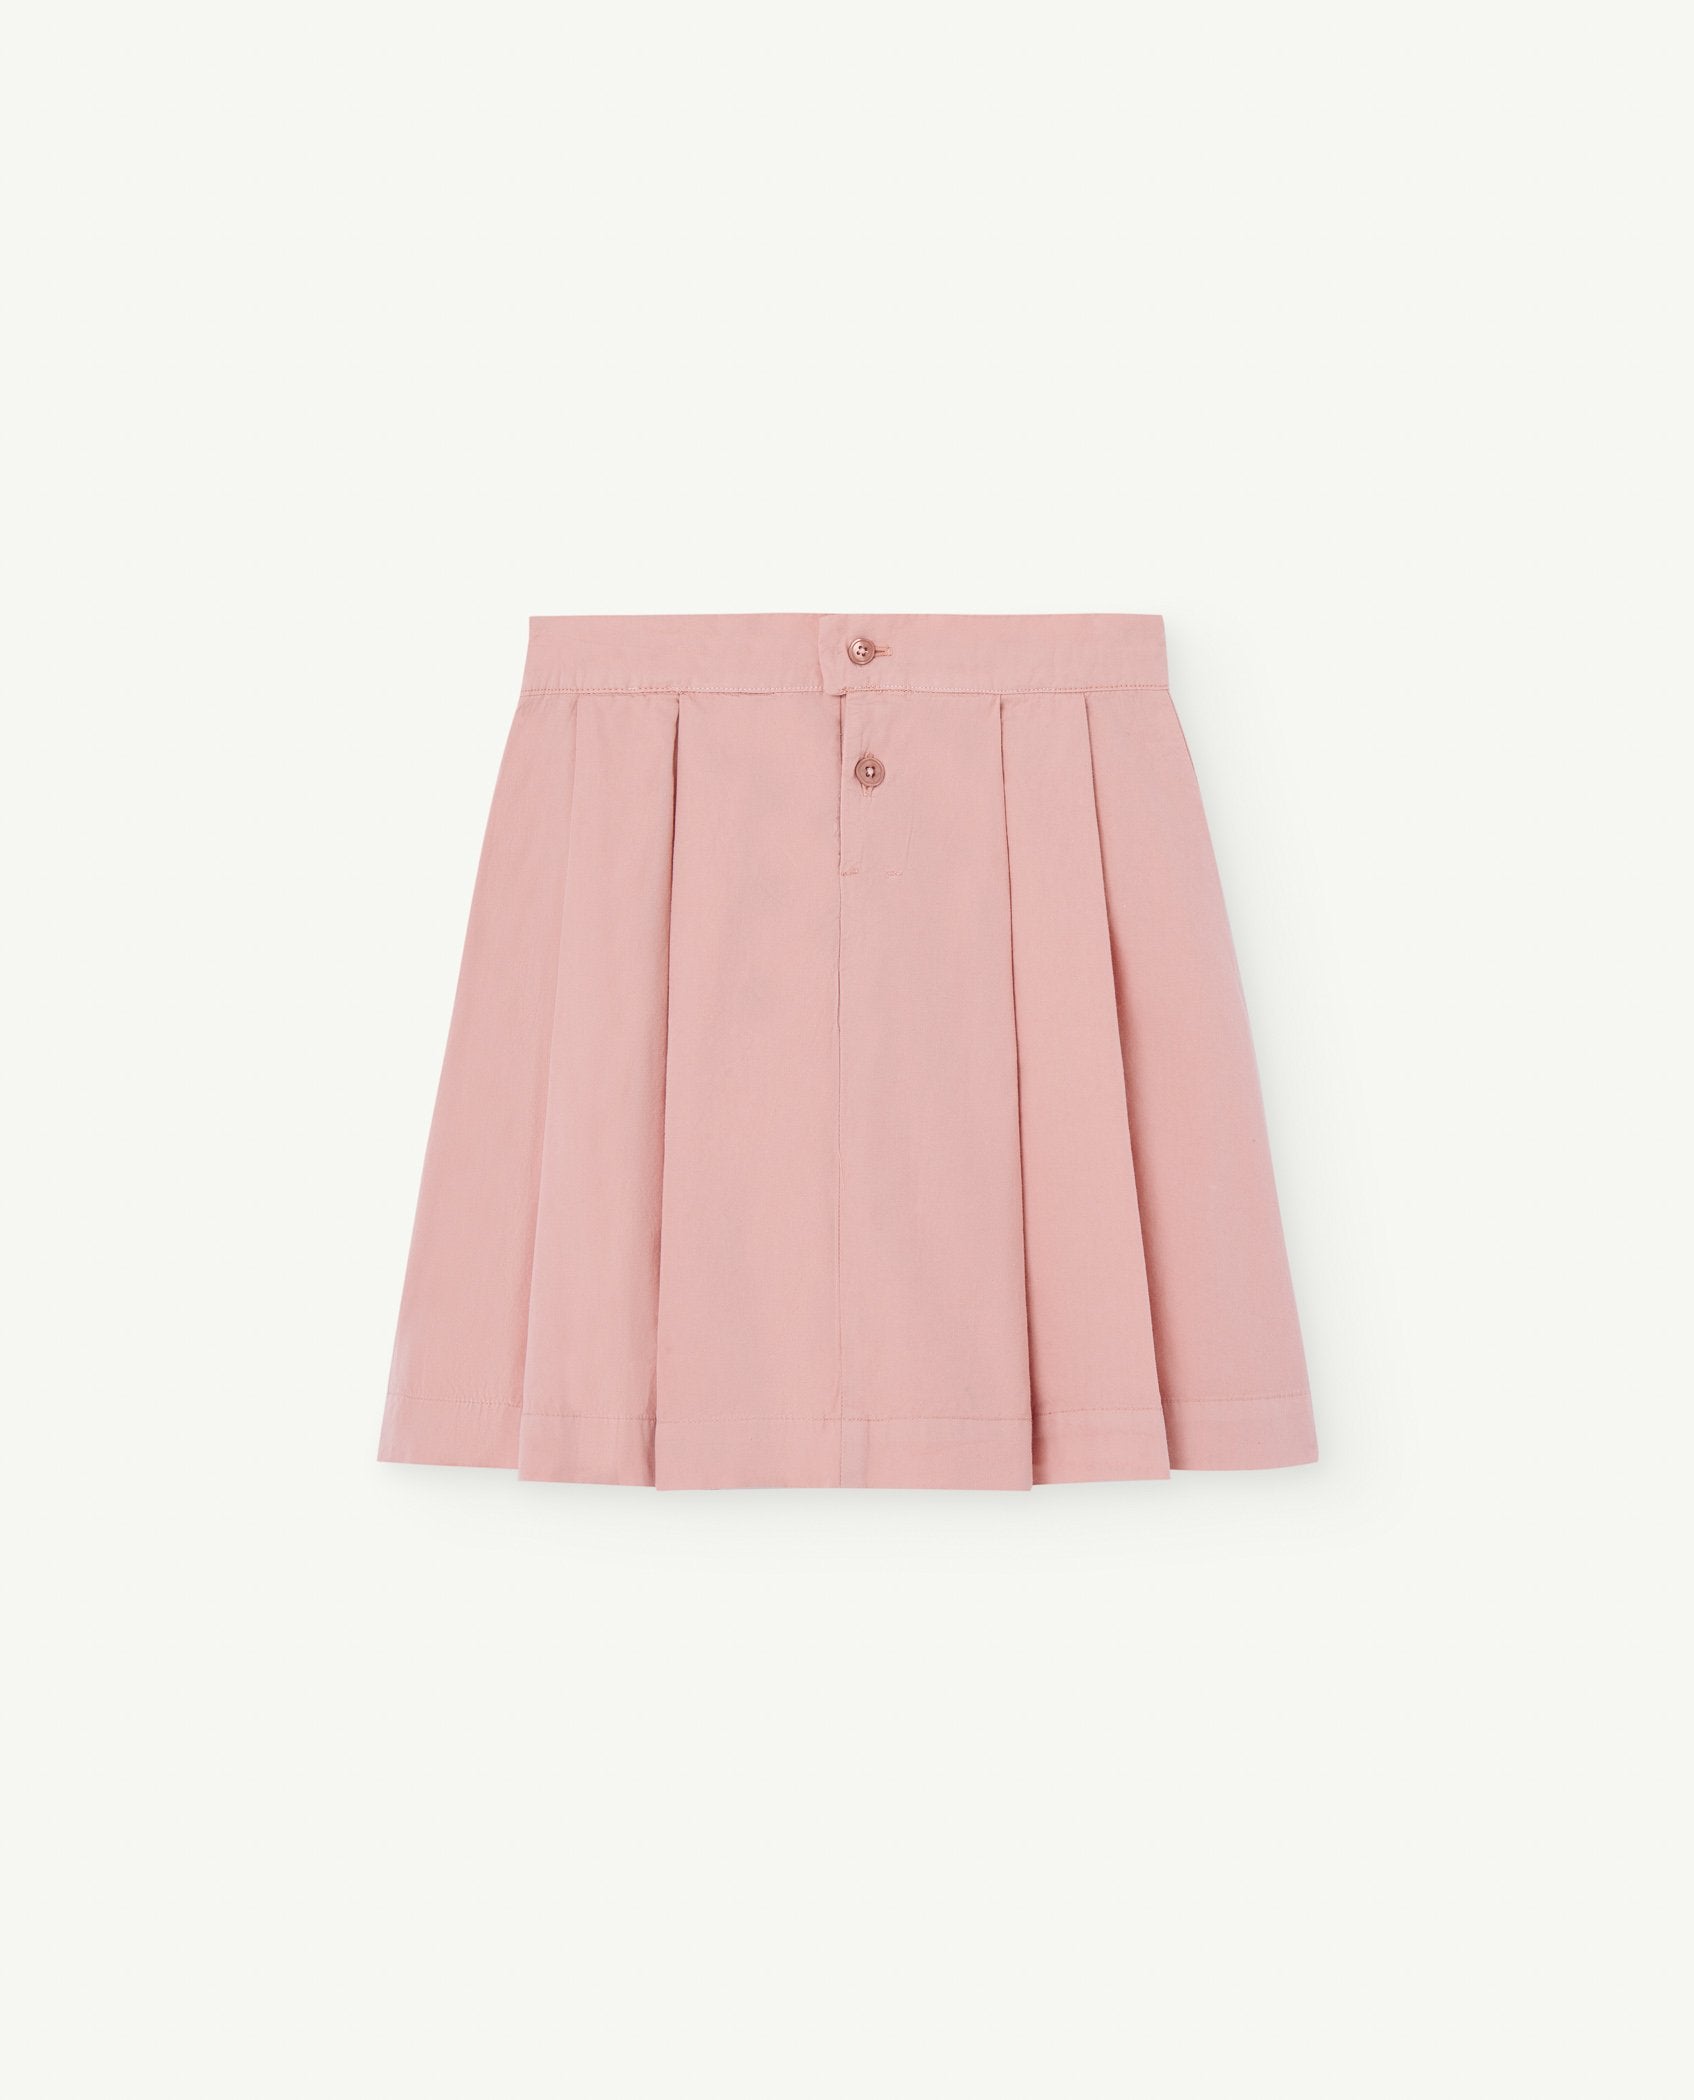 Pink Turkey Skirt PRODUCT BACK